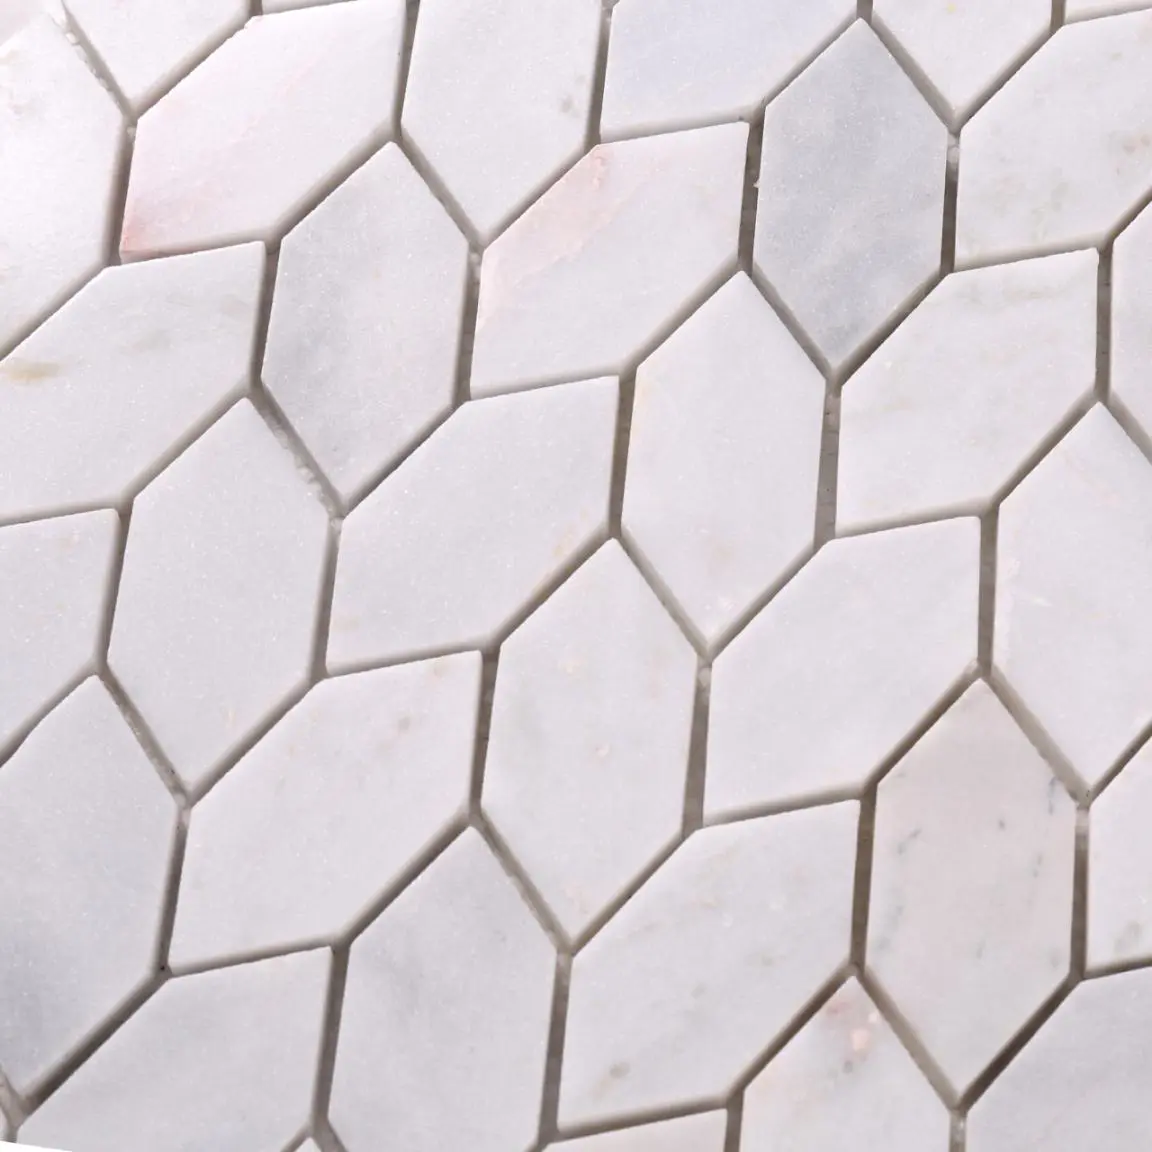 HSC97 Best Price Leaf Shape Natural Stone Decorative Mosaic